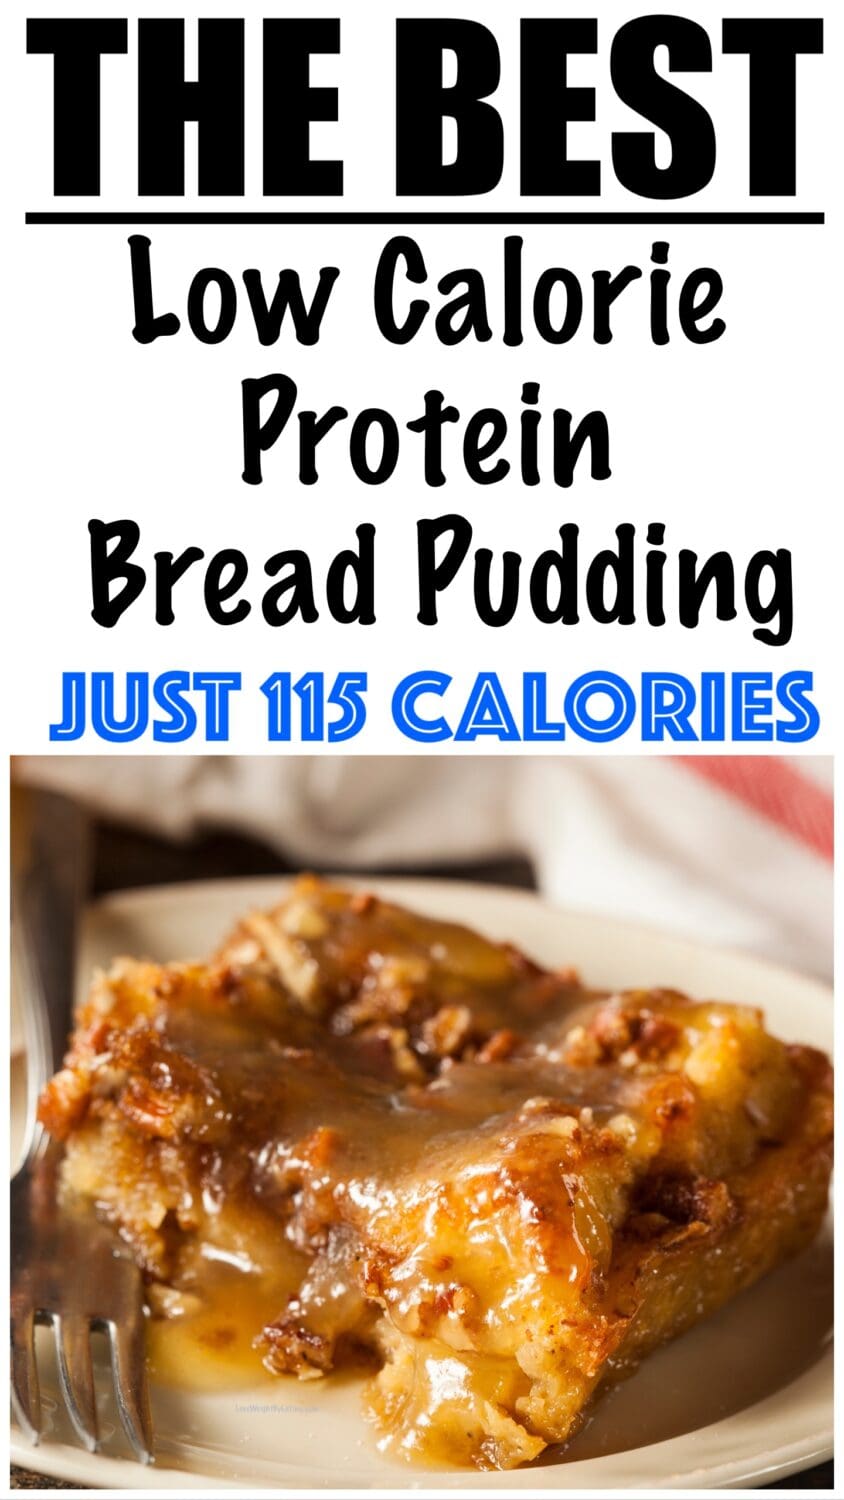 Low Calorie Bread Pudding